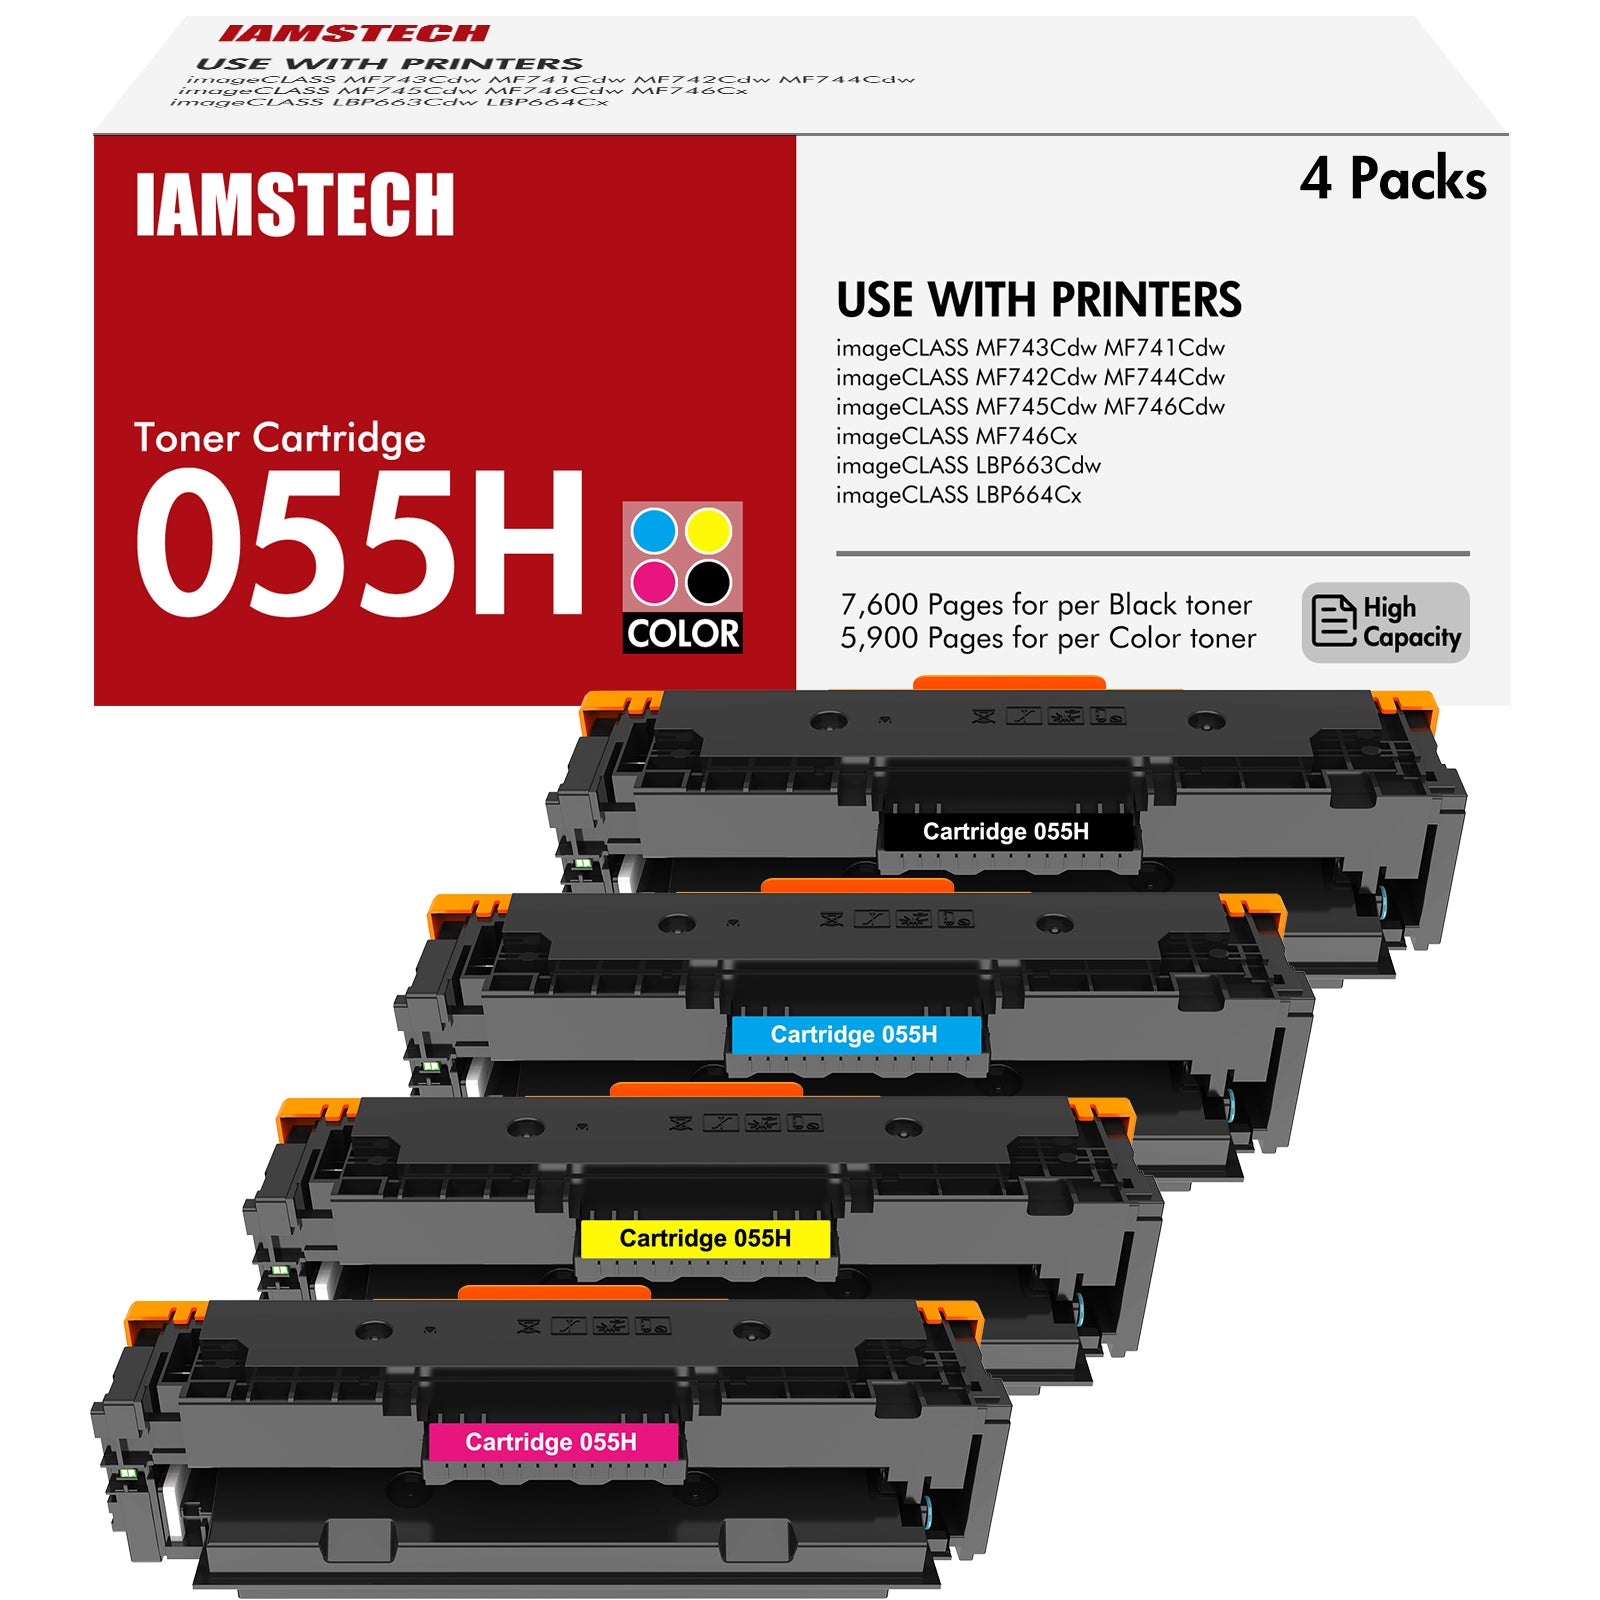 055H 055 Toner Cartridge Compatible for Canon 055H 055 imageCLASS MF741CDW MF743Cdw imageCLASS LBP664CX LBP663CDW Laser Printer (Black, Cyan, Magenta, Yellow, 4-Pack)